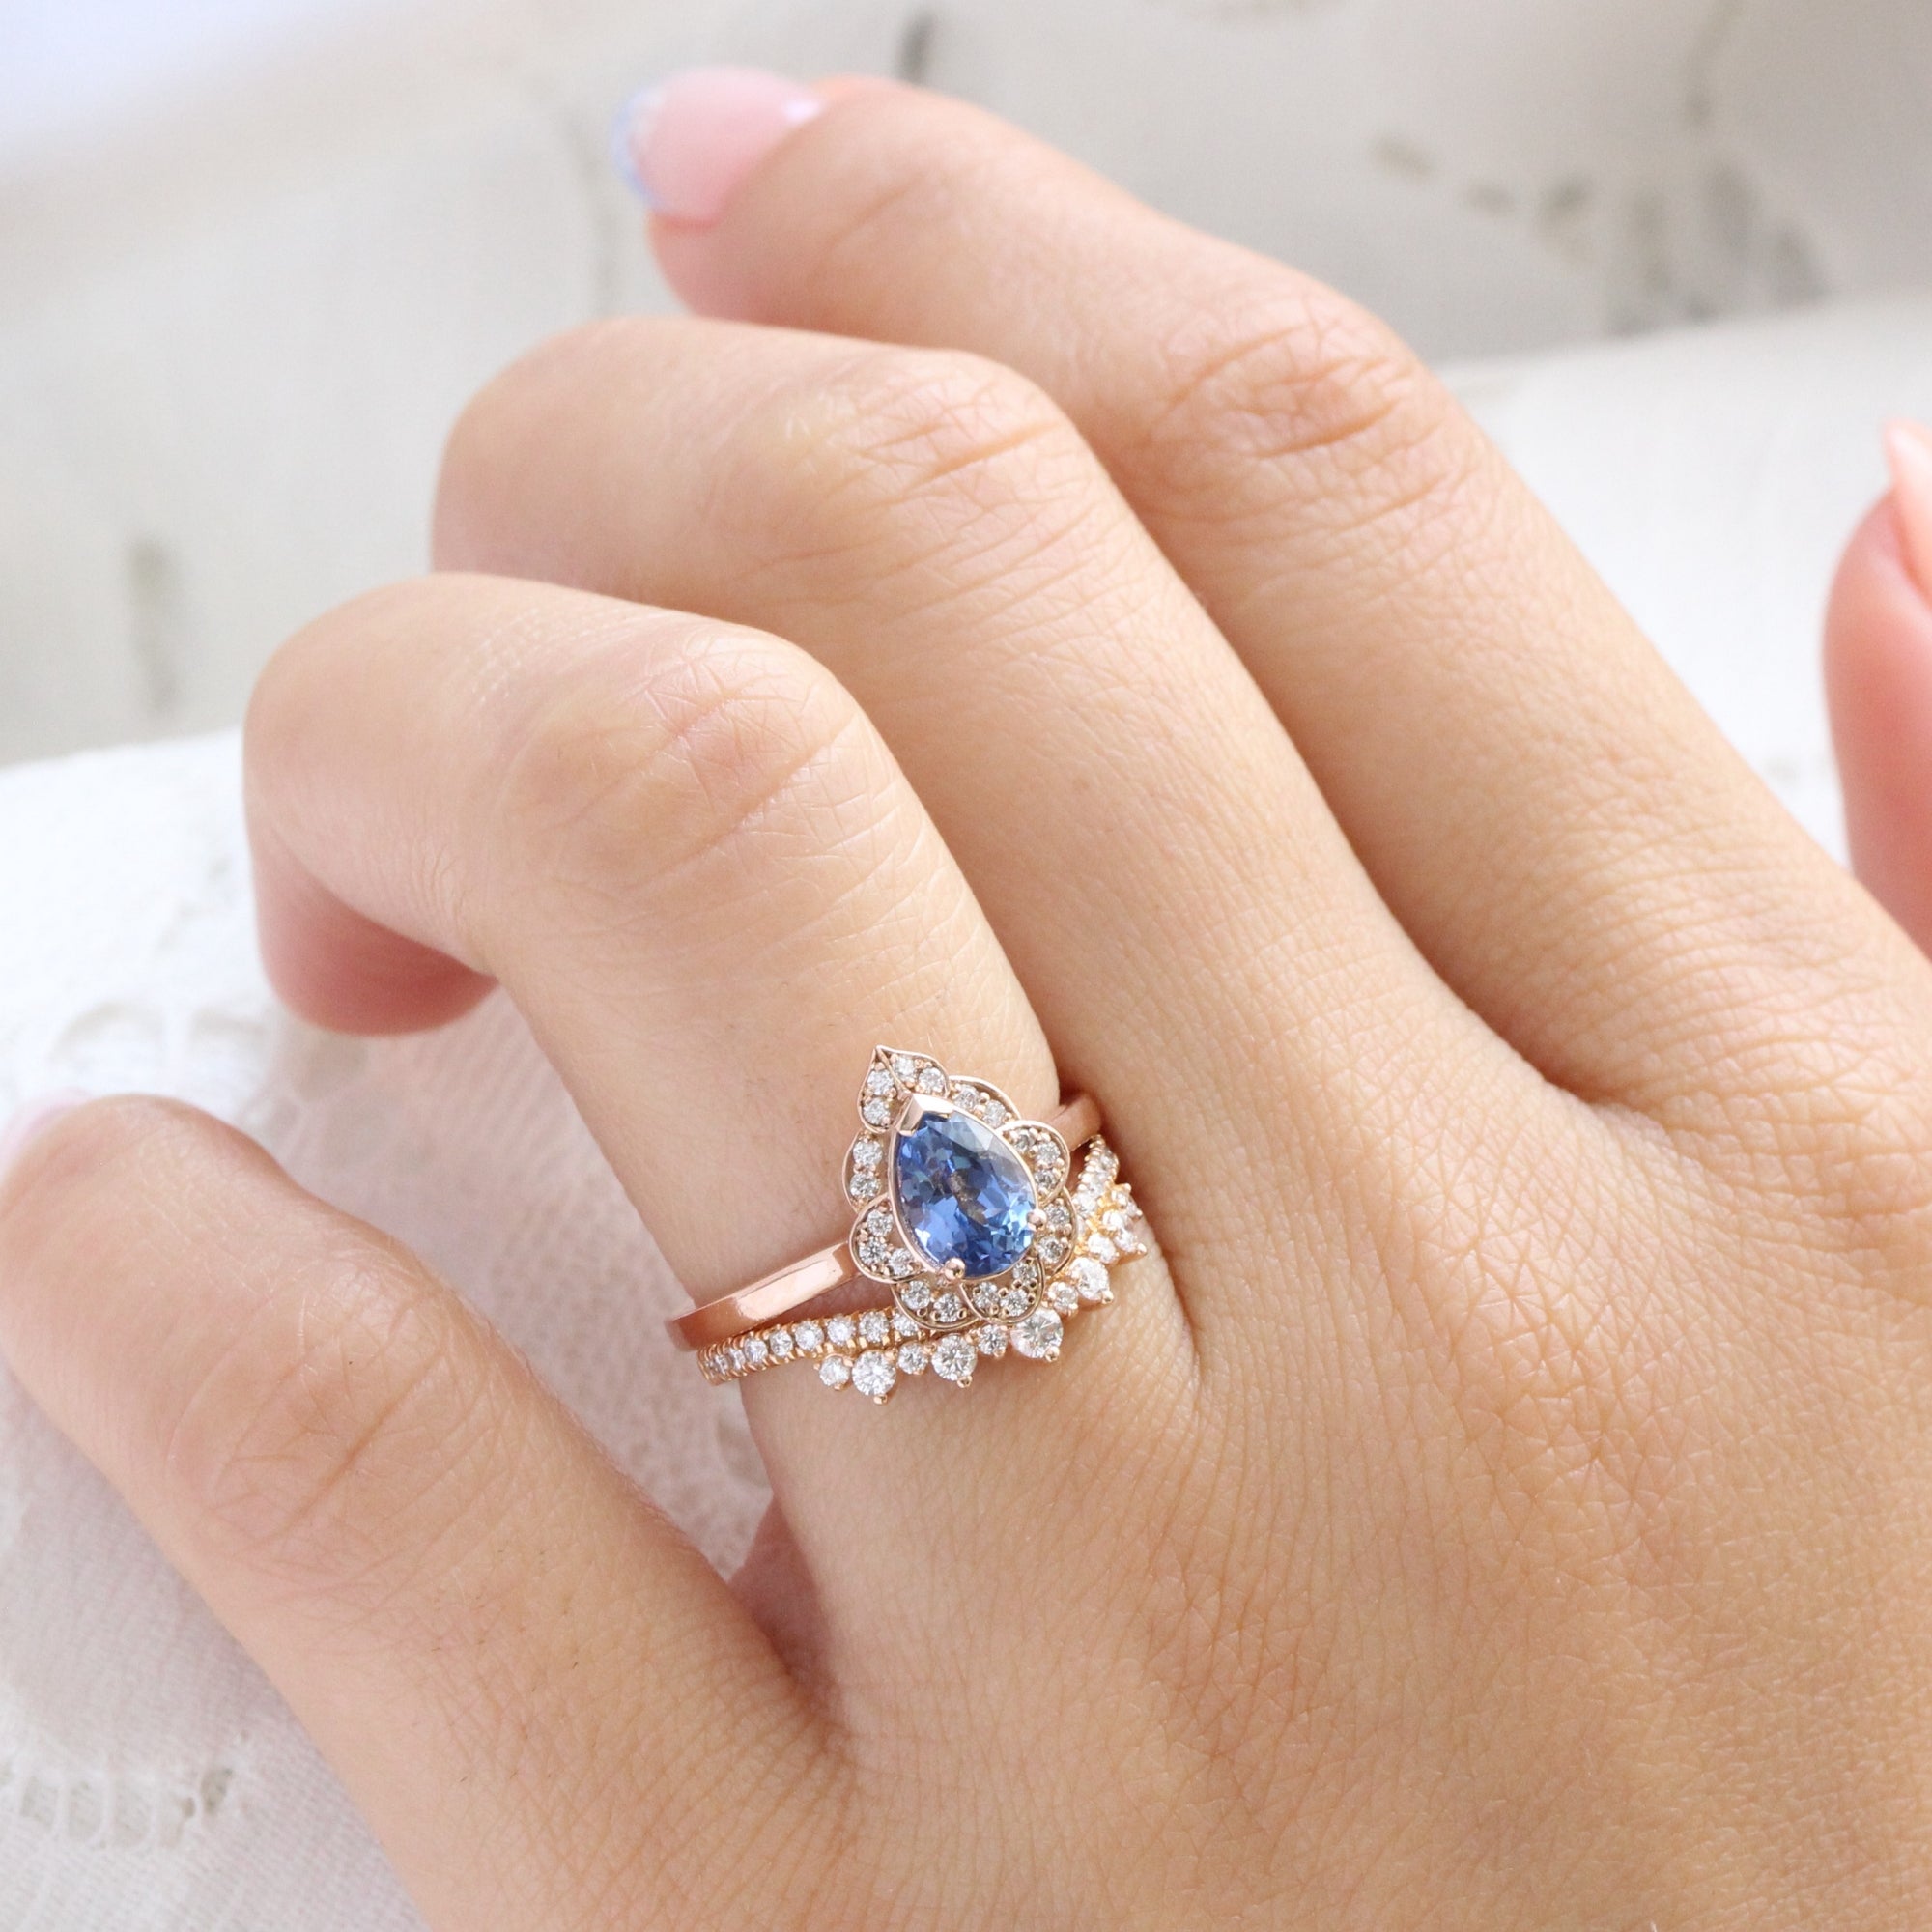 Pear Ceylon blue sapphire ring rose gold vintage floral sapphire diamond ring la more design jewelry